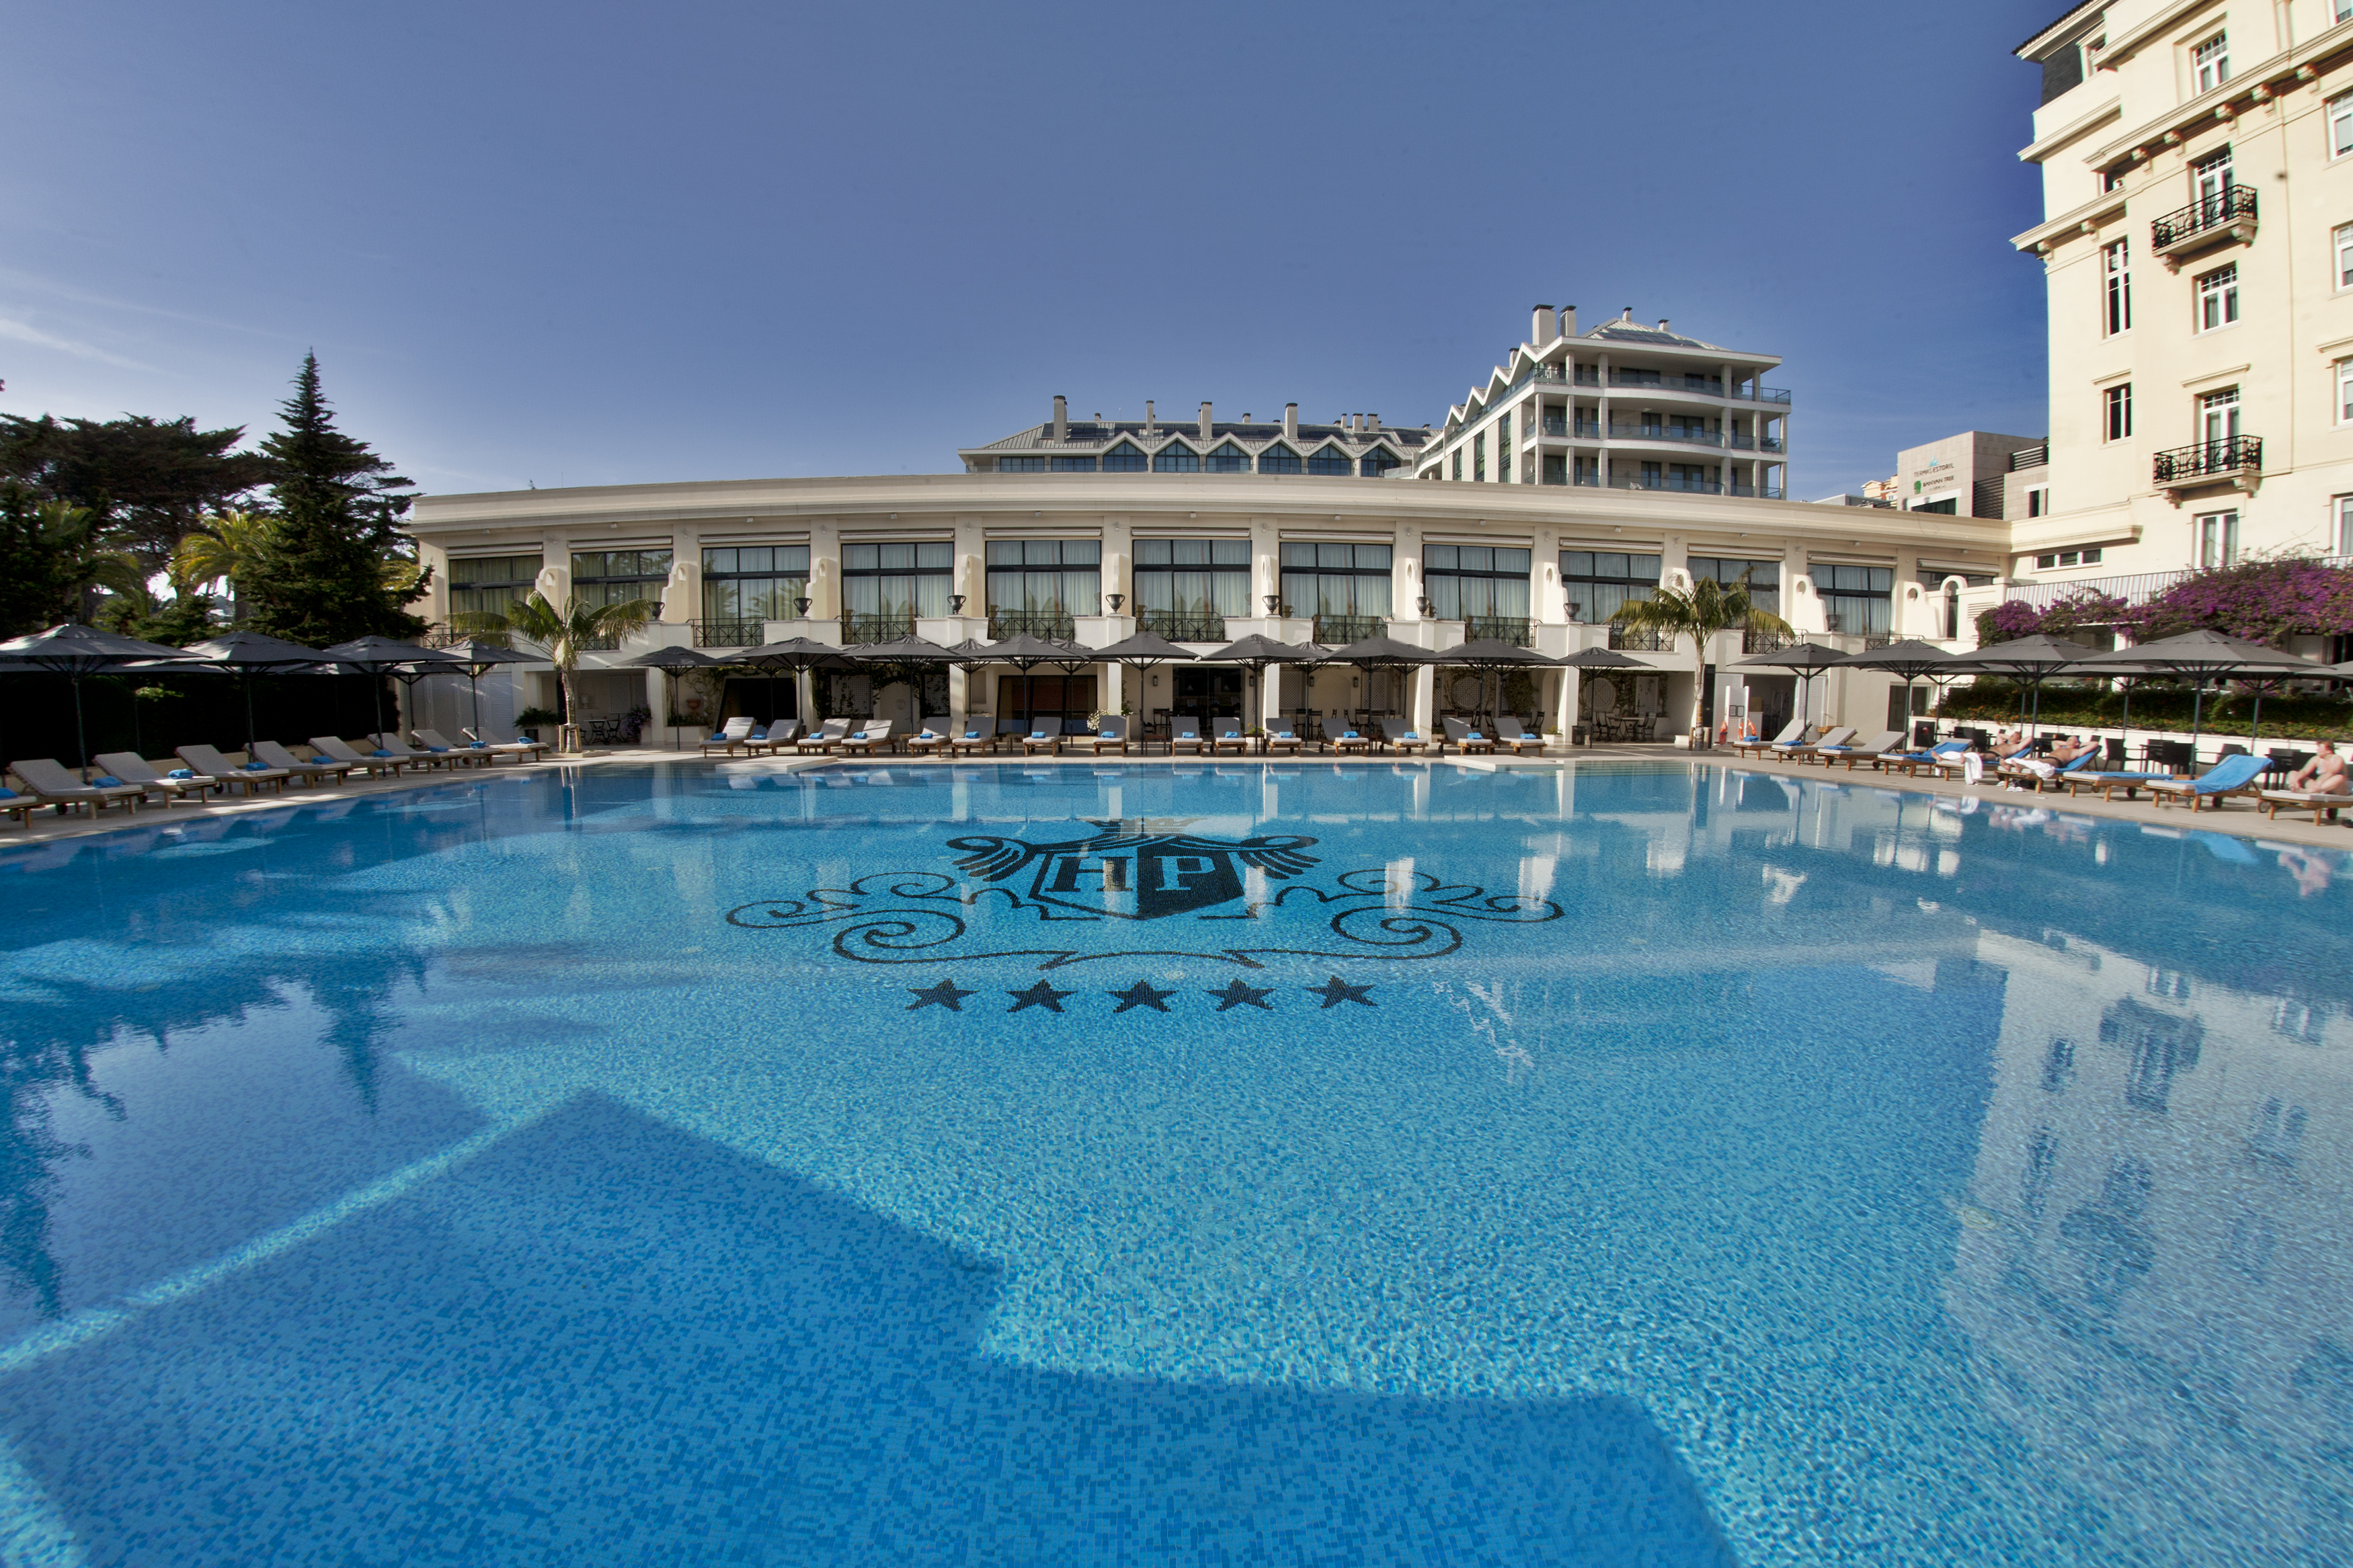 Golf-expedition-golfreizen-golfresort-Palacio-Estoril-Hotel-Golf-And-Spa-resort-pool-front-view